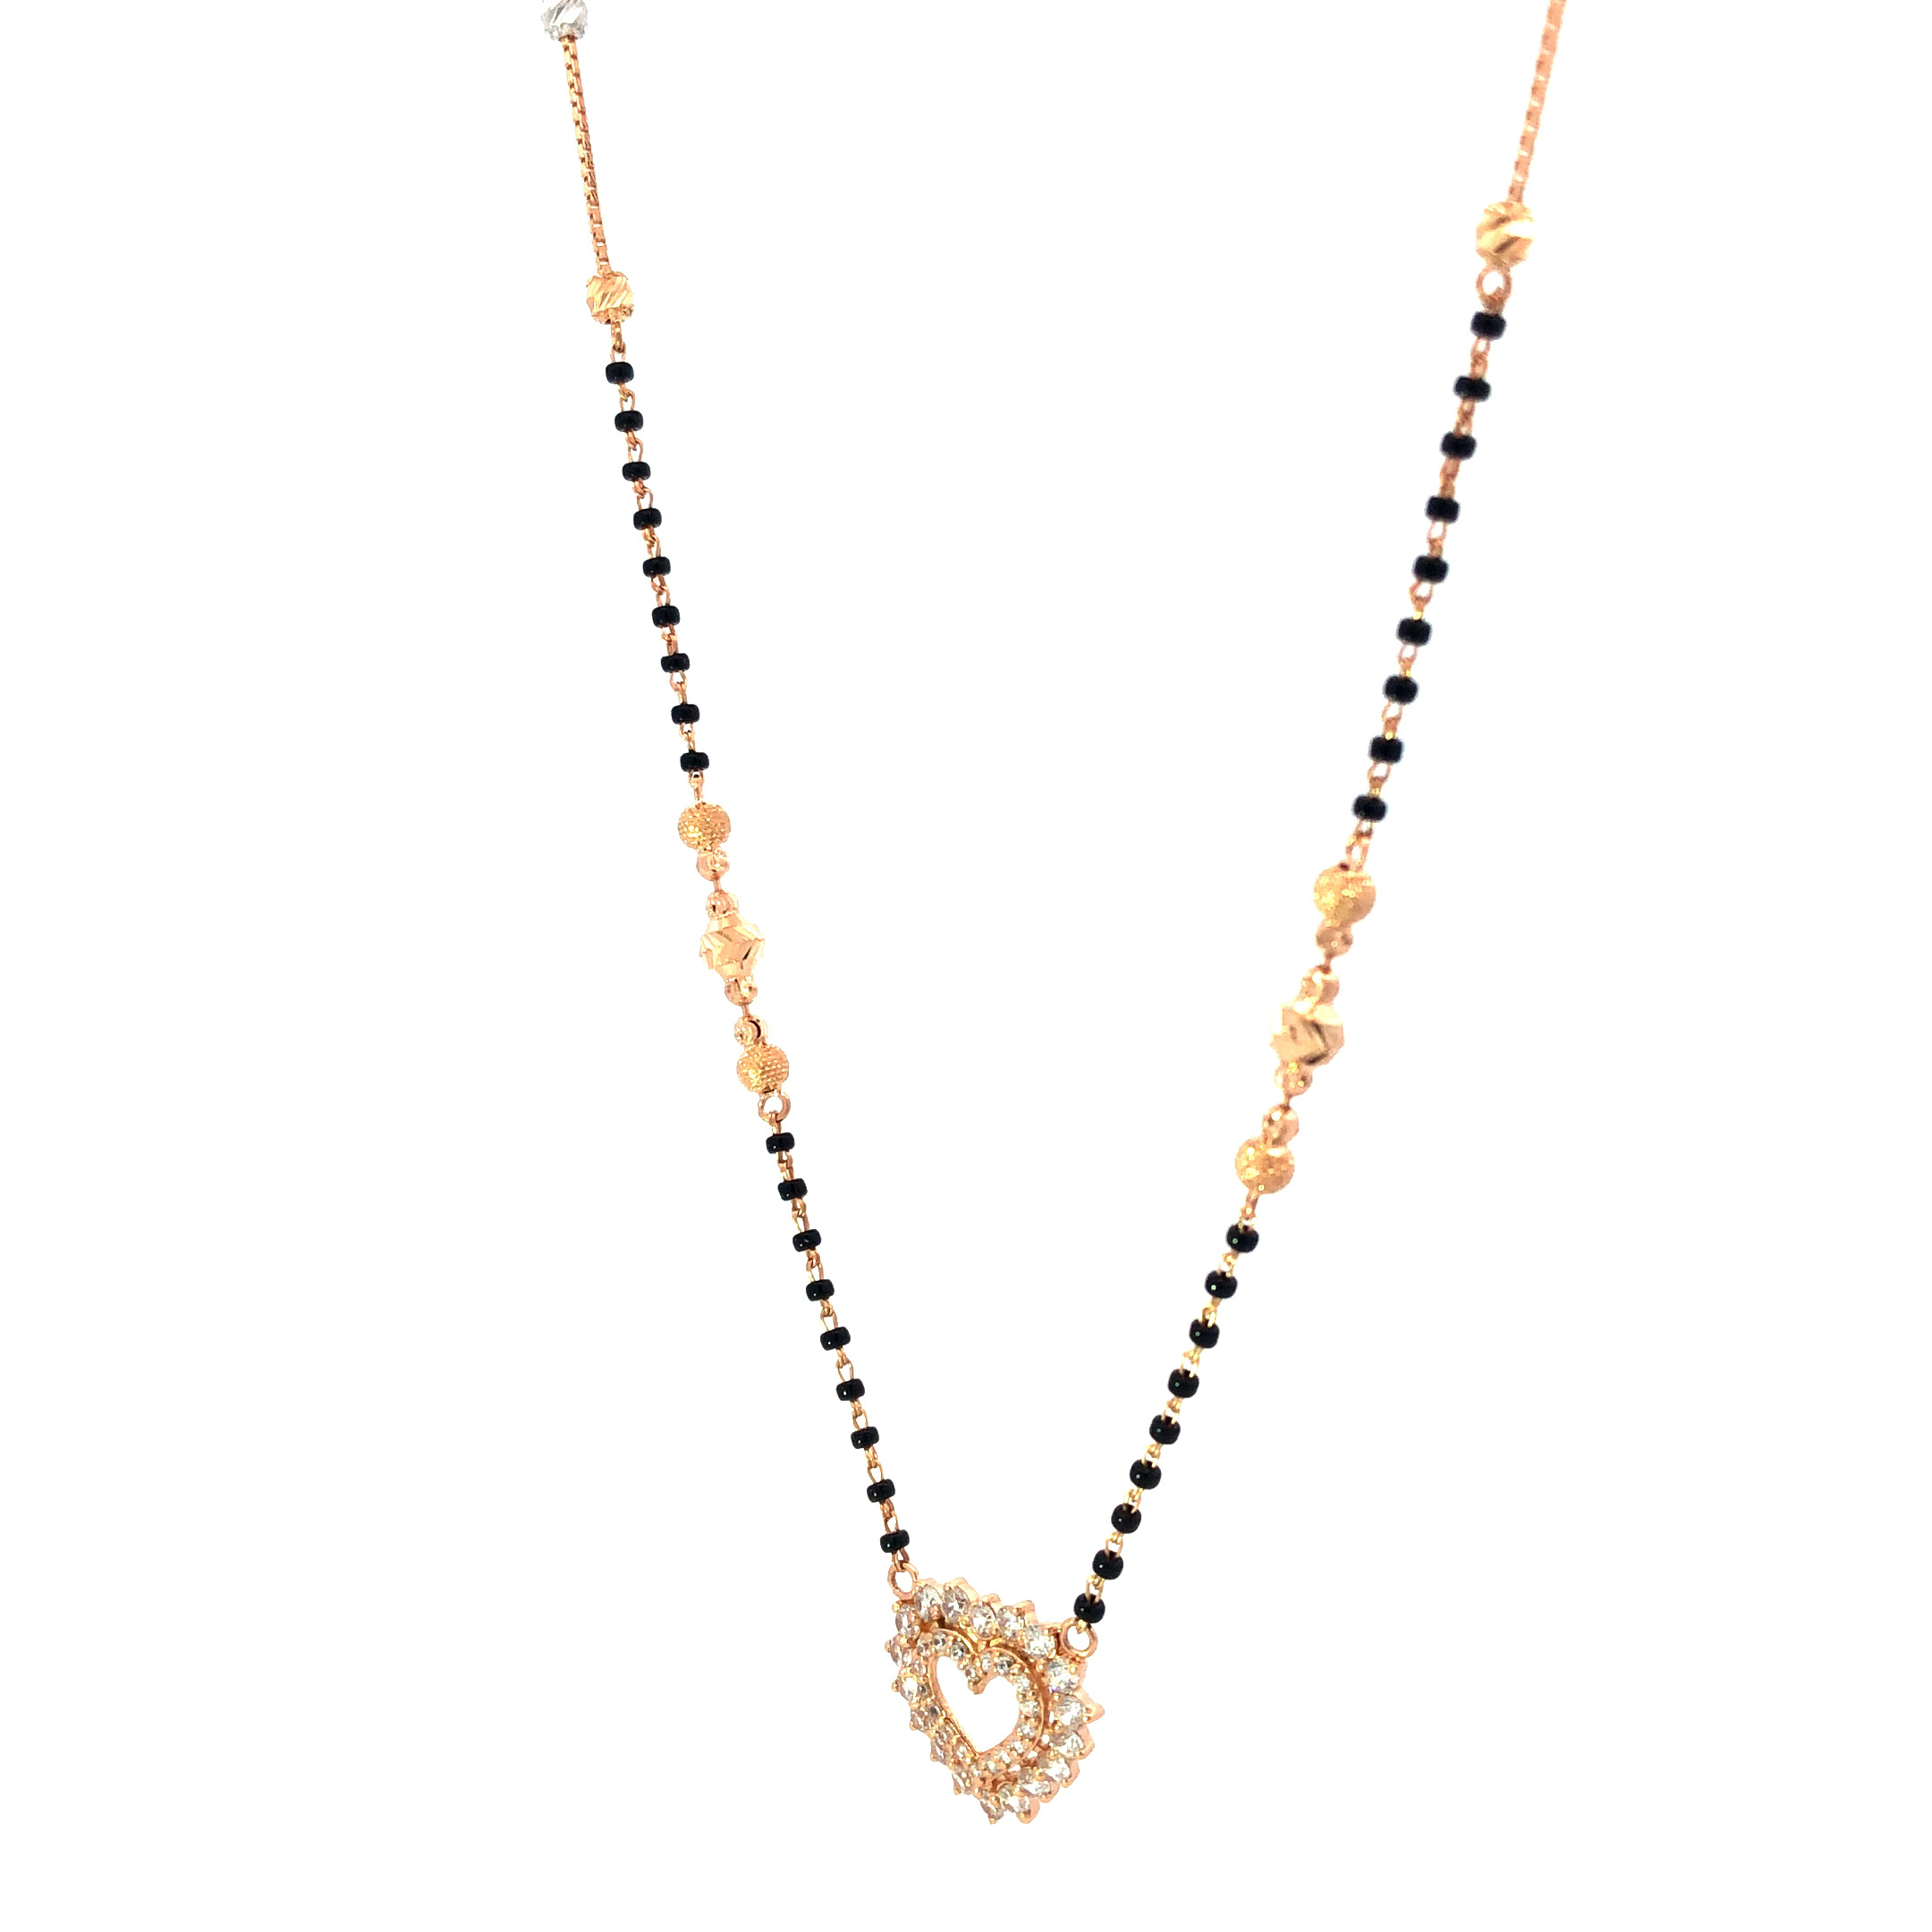 Heart pendant in 18k gold with diamonds, mini.